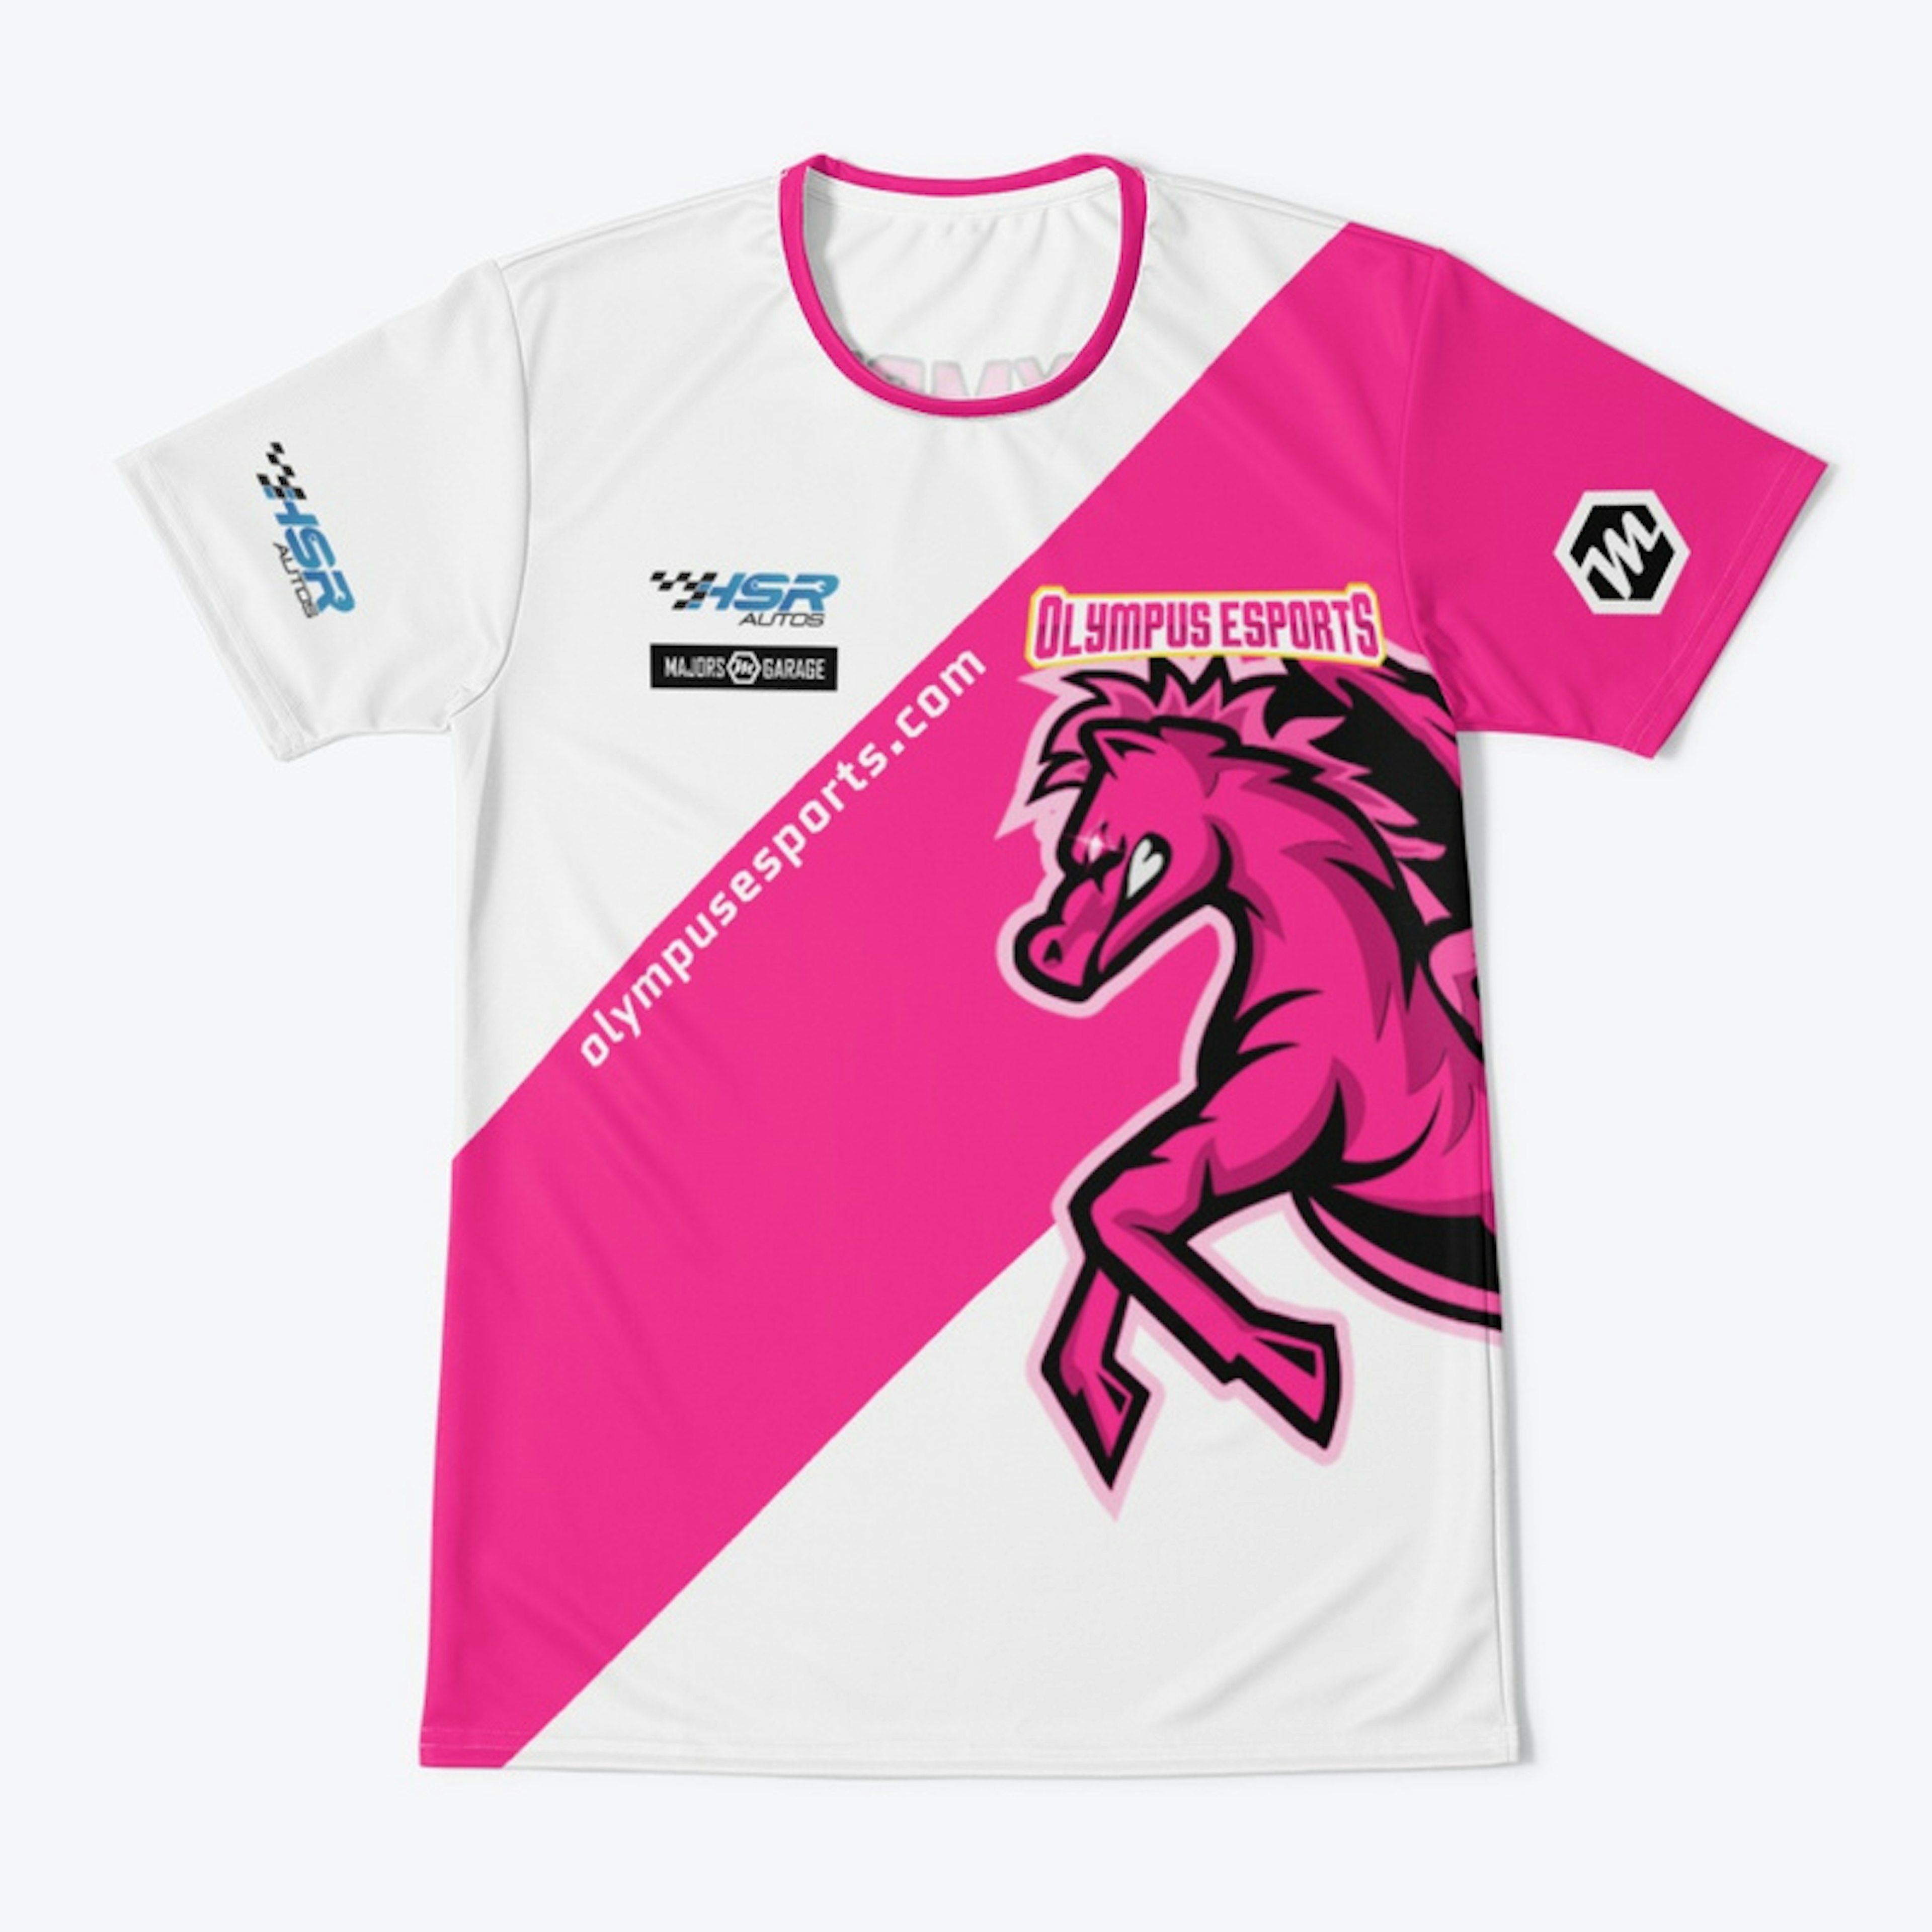 Team Jersey - Pink